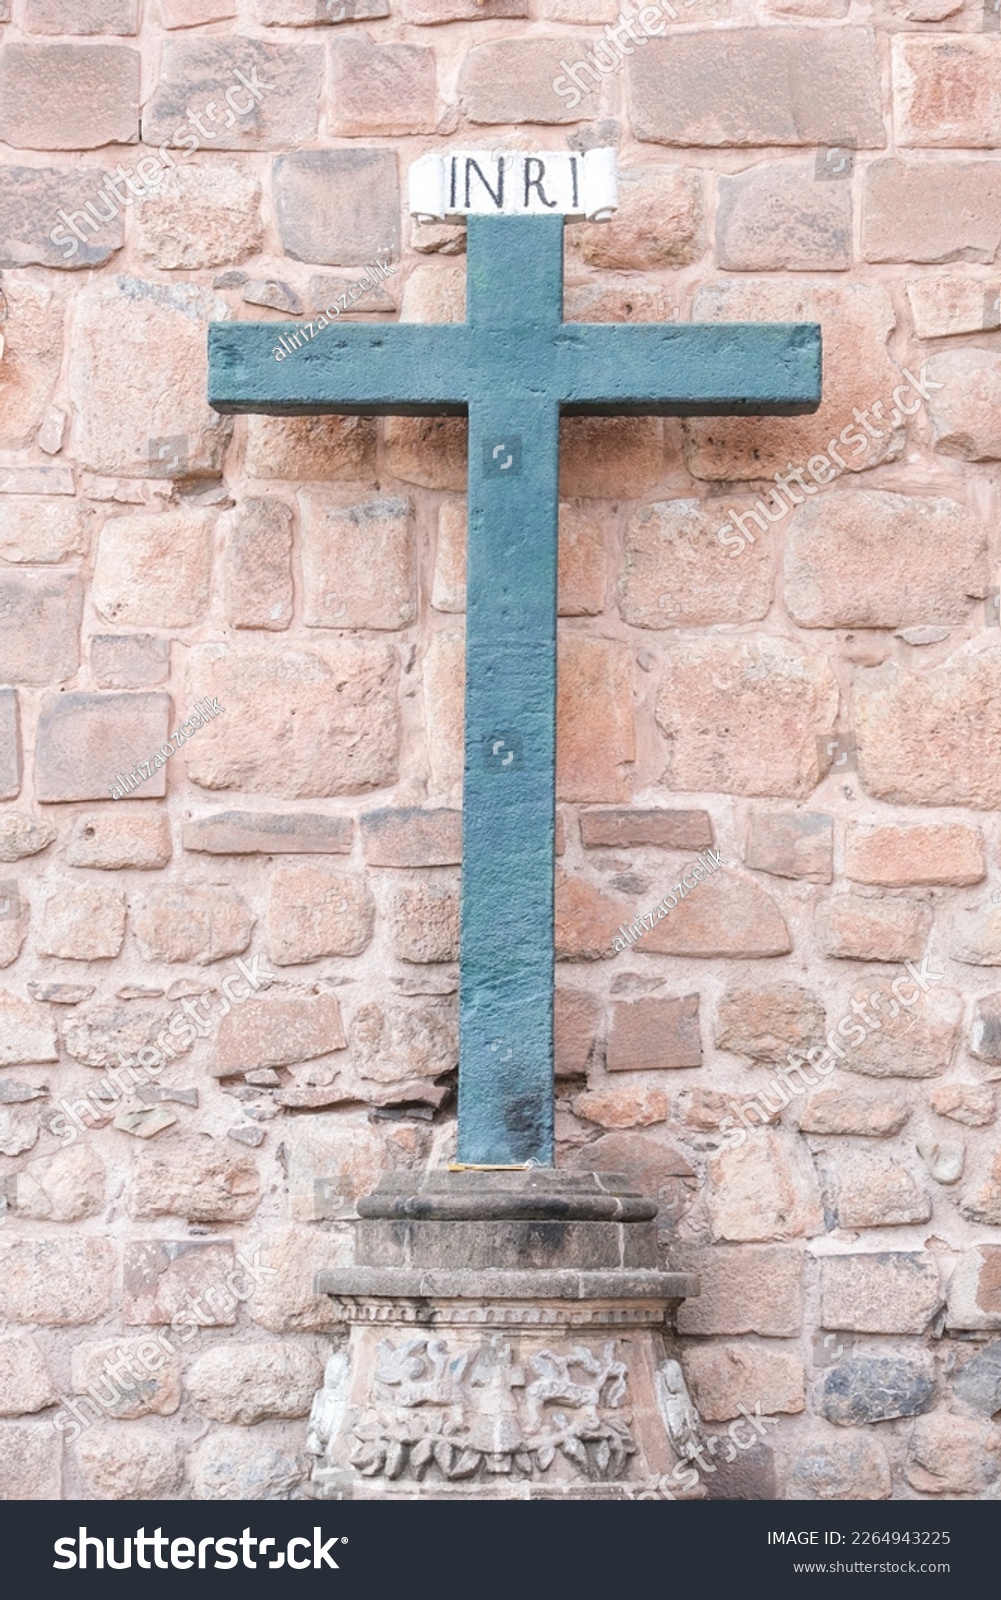 Inri christian cross symbol behind of catedral wall in Cusco Peru. Selective focus.  #2264943225